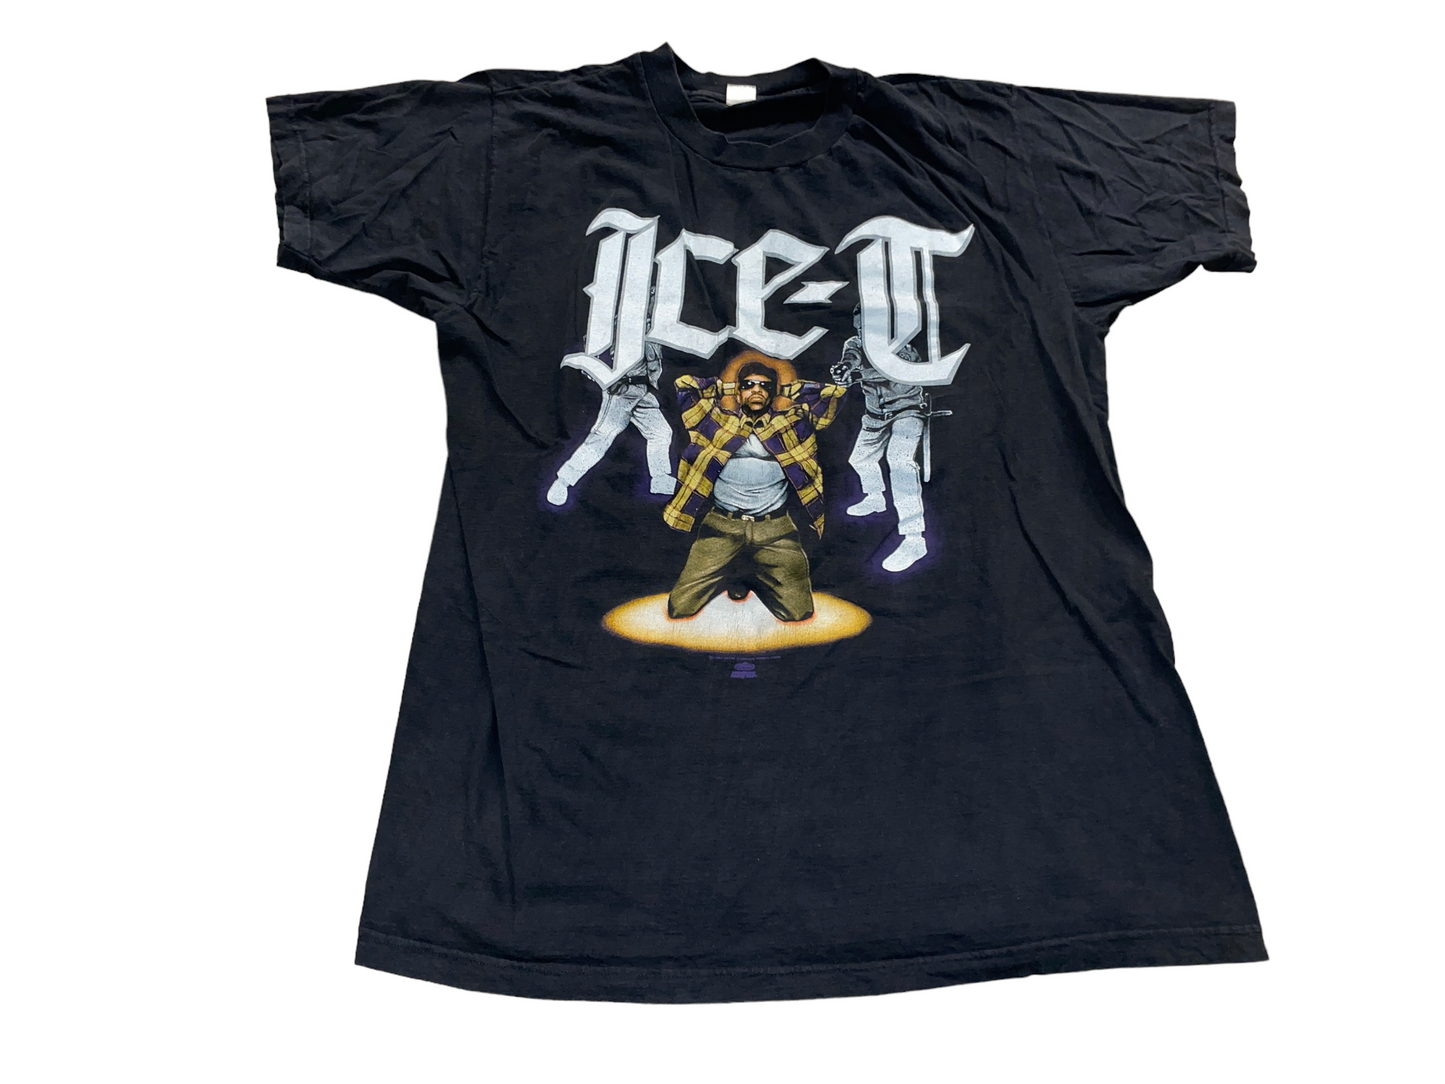 Vintage 1992 Ice-T Shirt